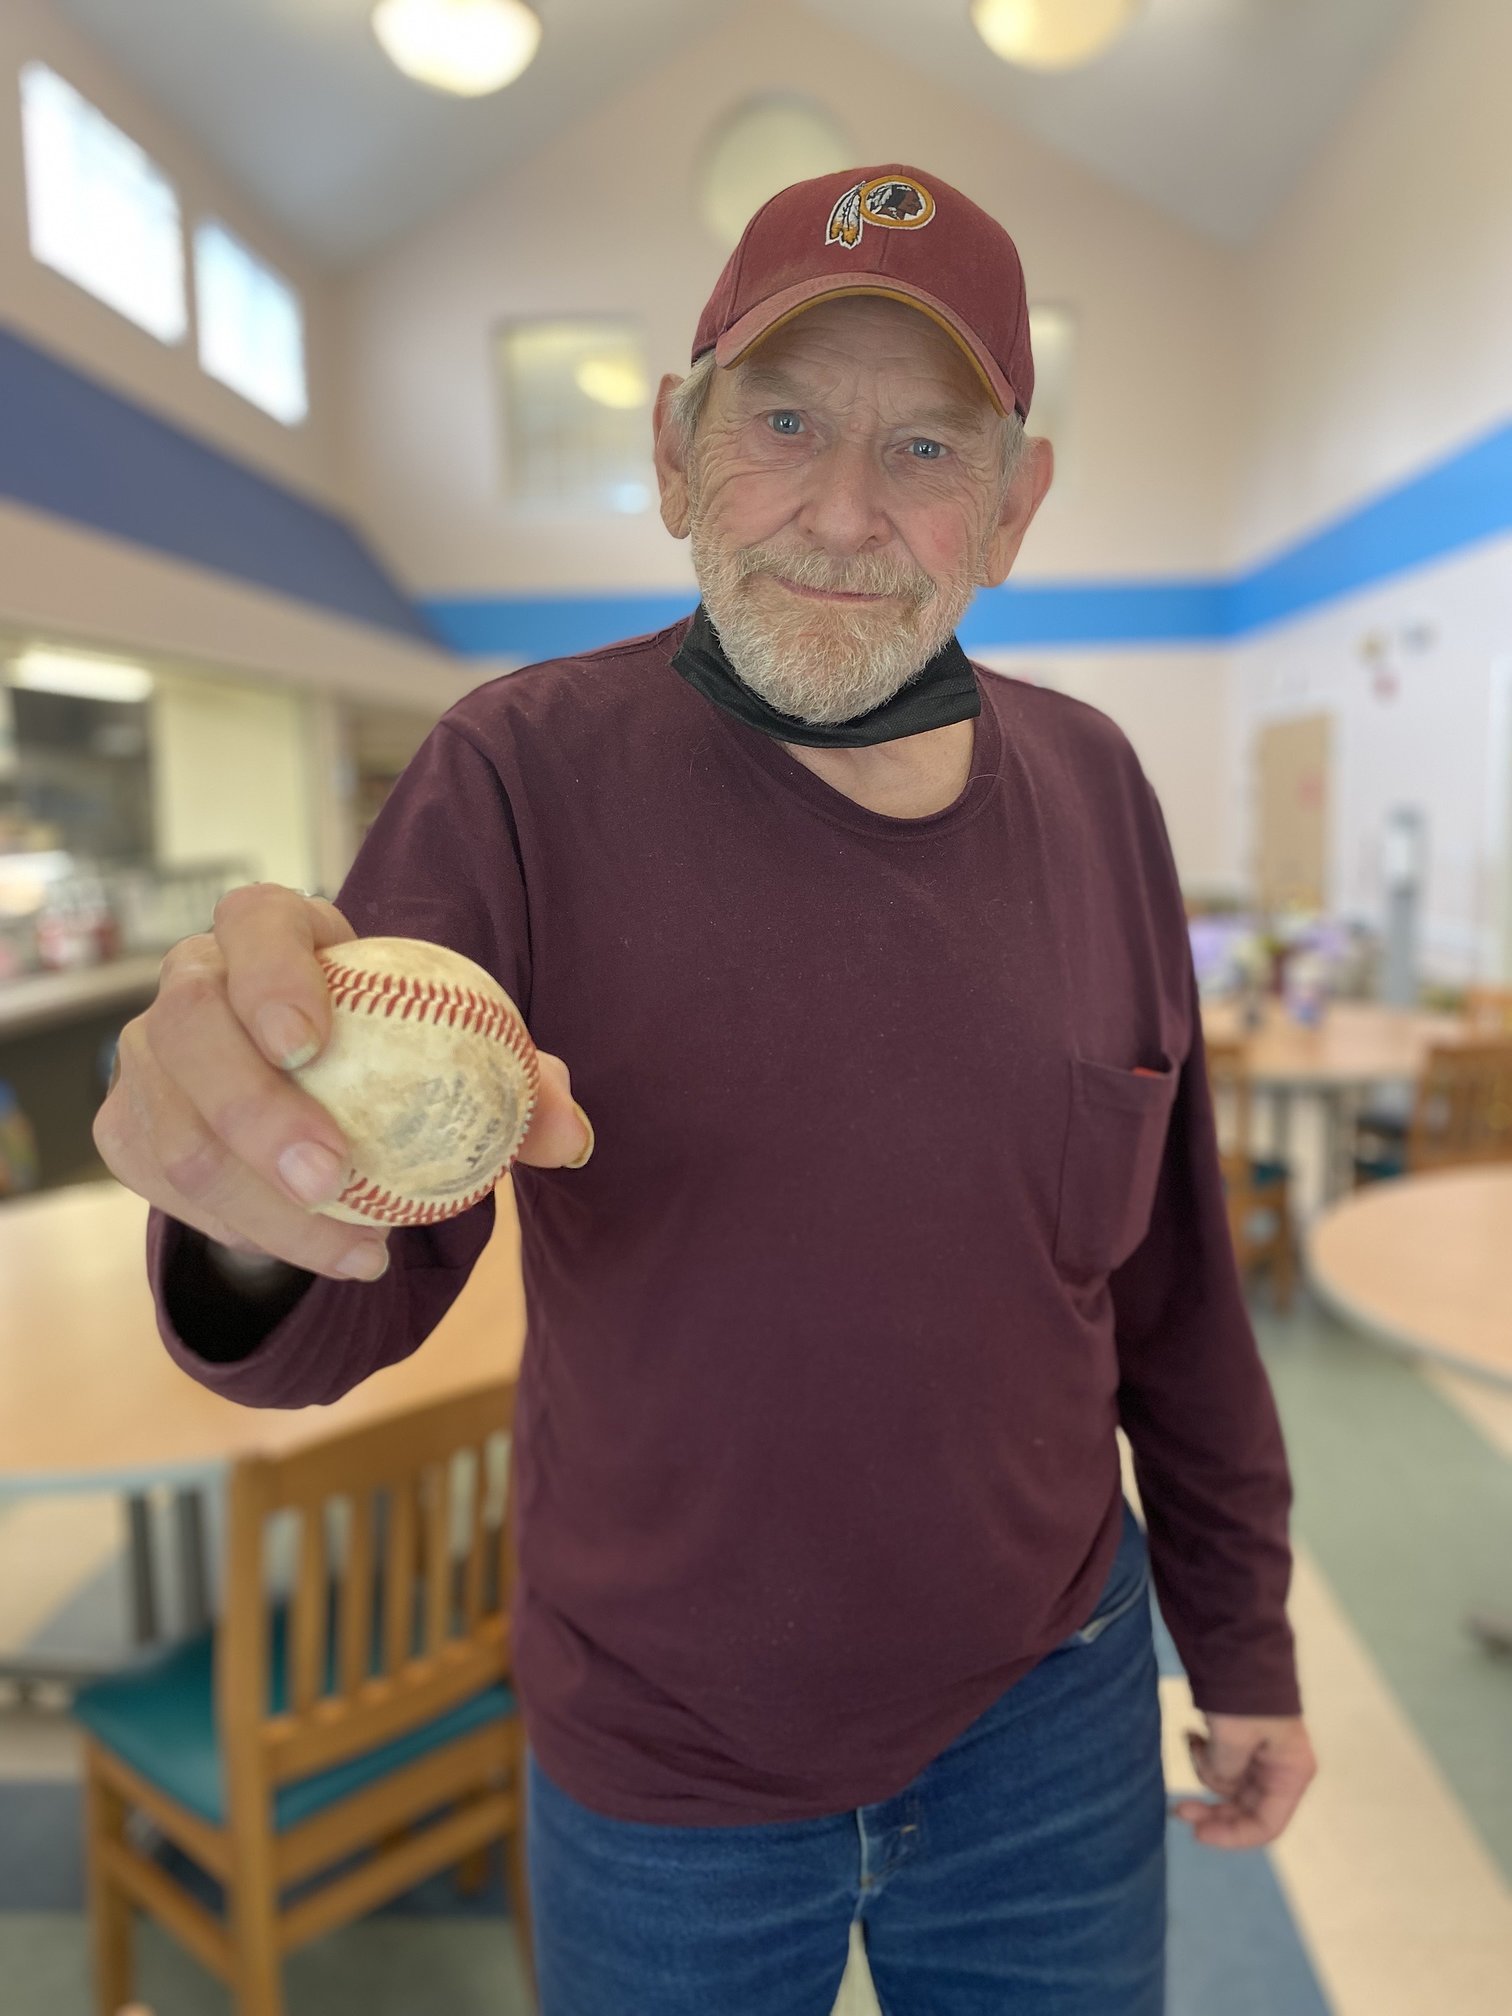 John Franklin holding a baseball